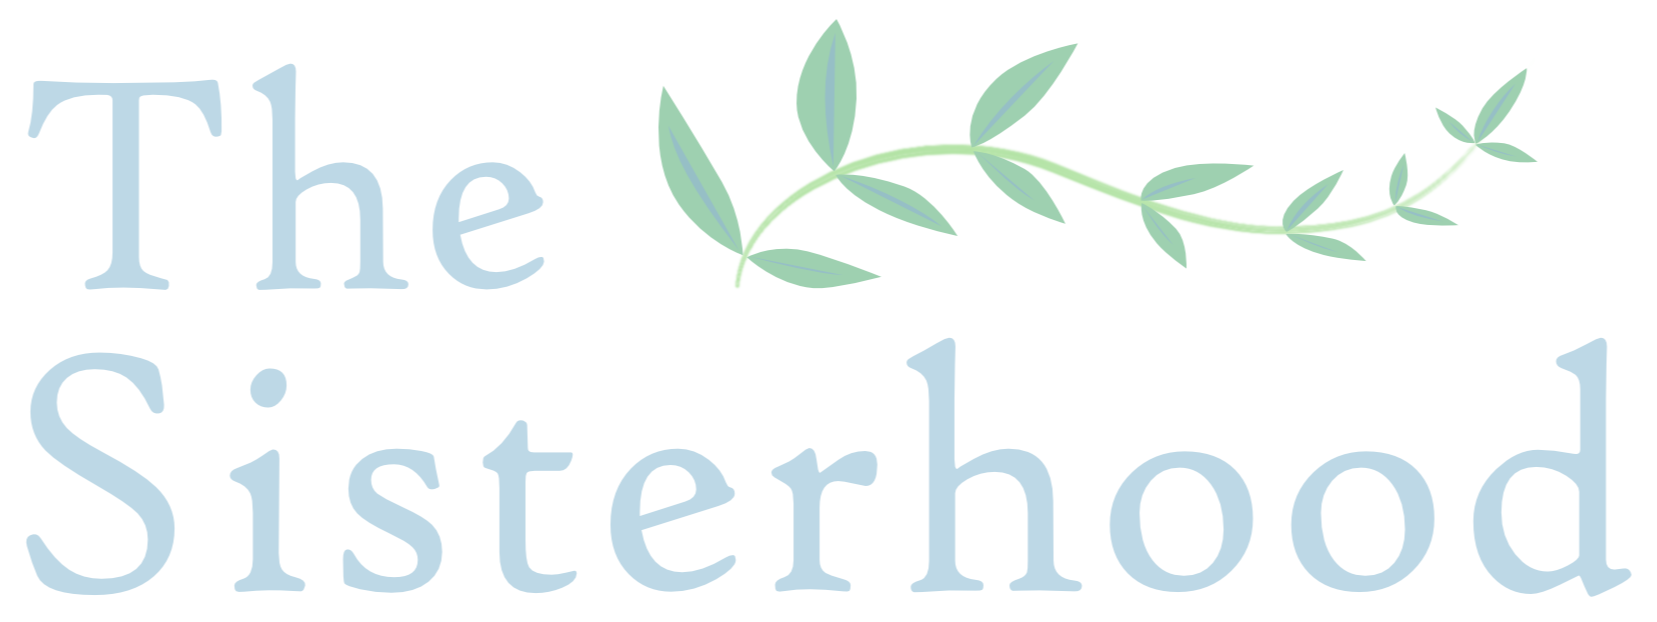 The Sisterhood of Sobriety logo